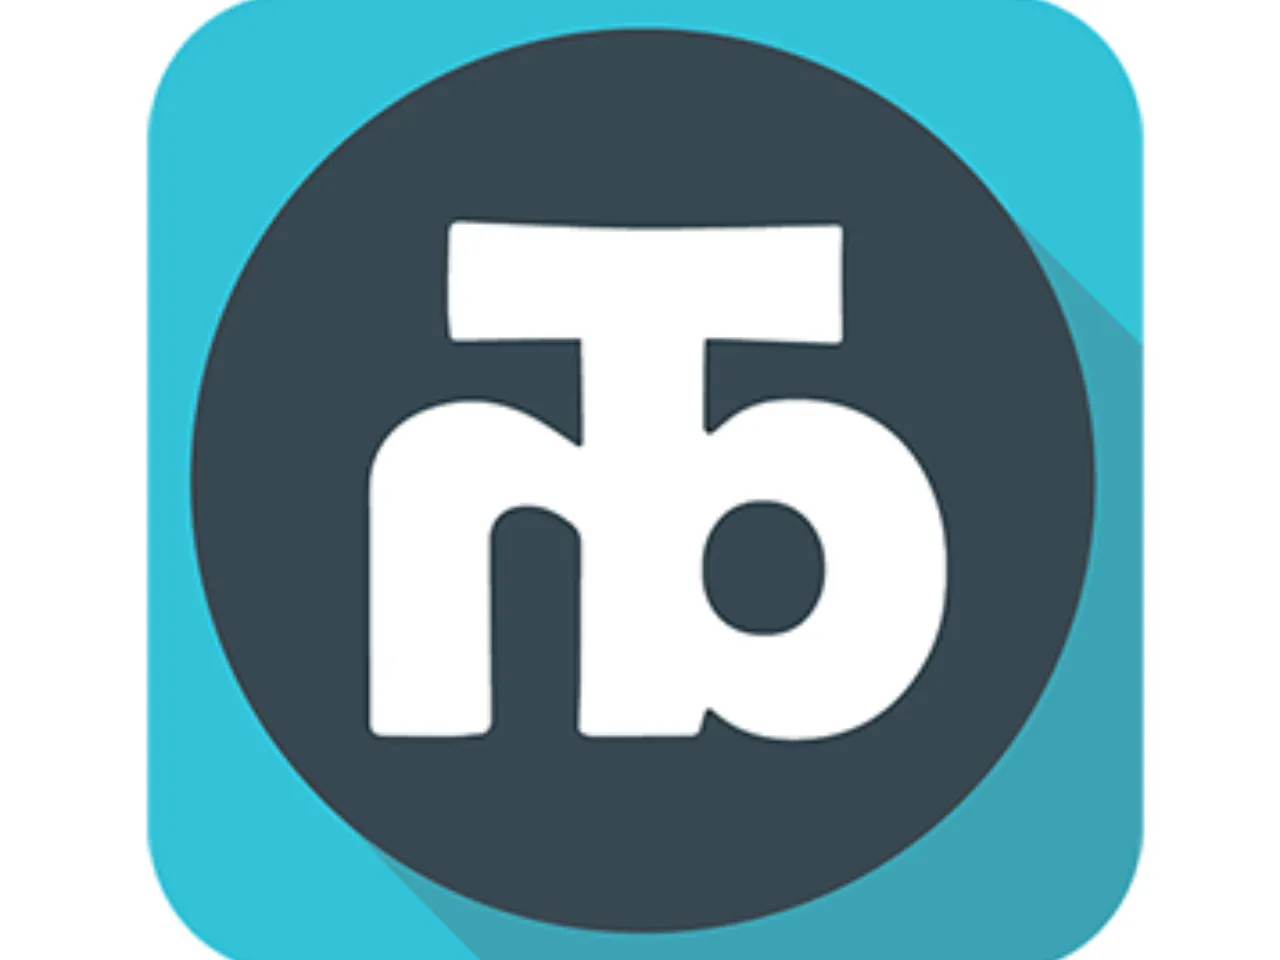 thb logo